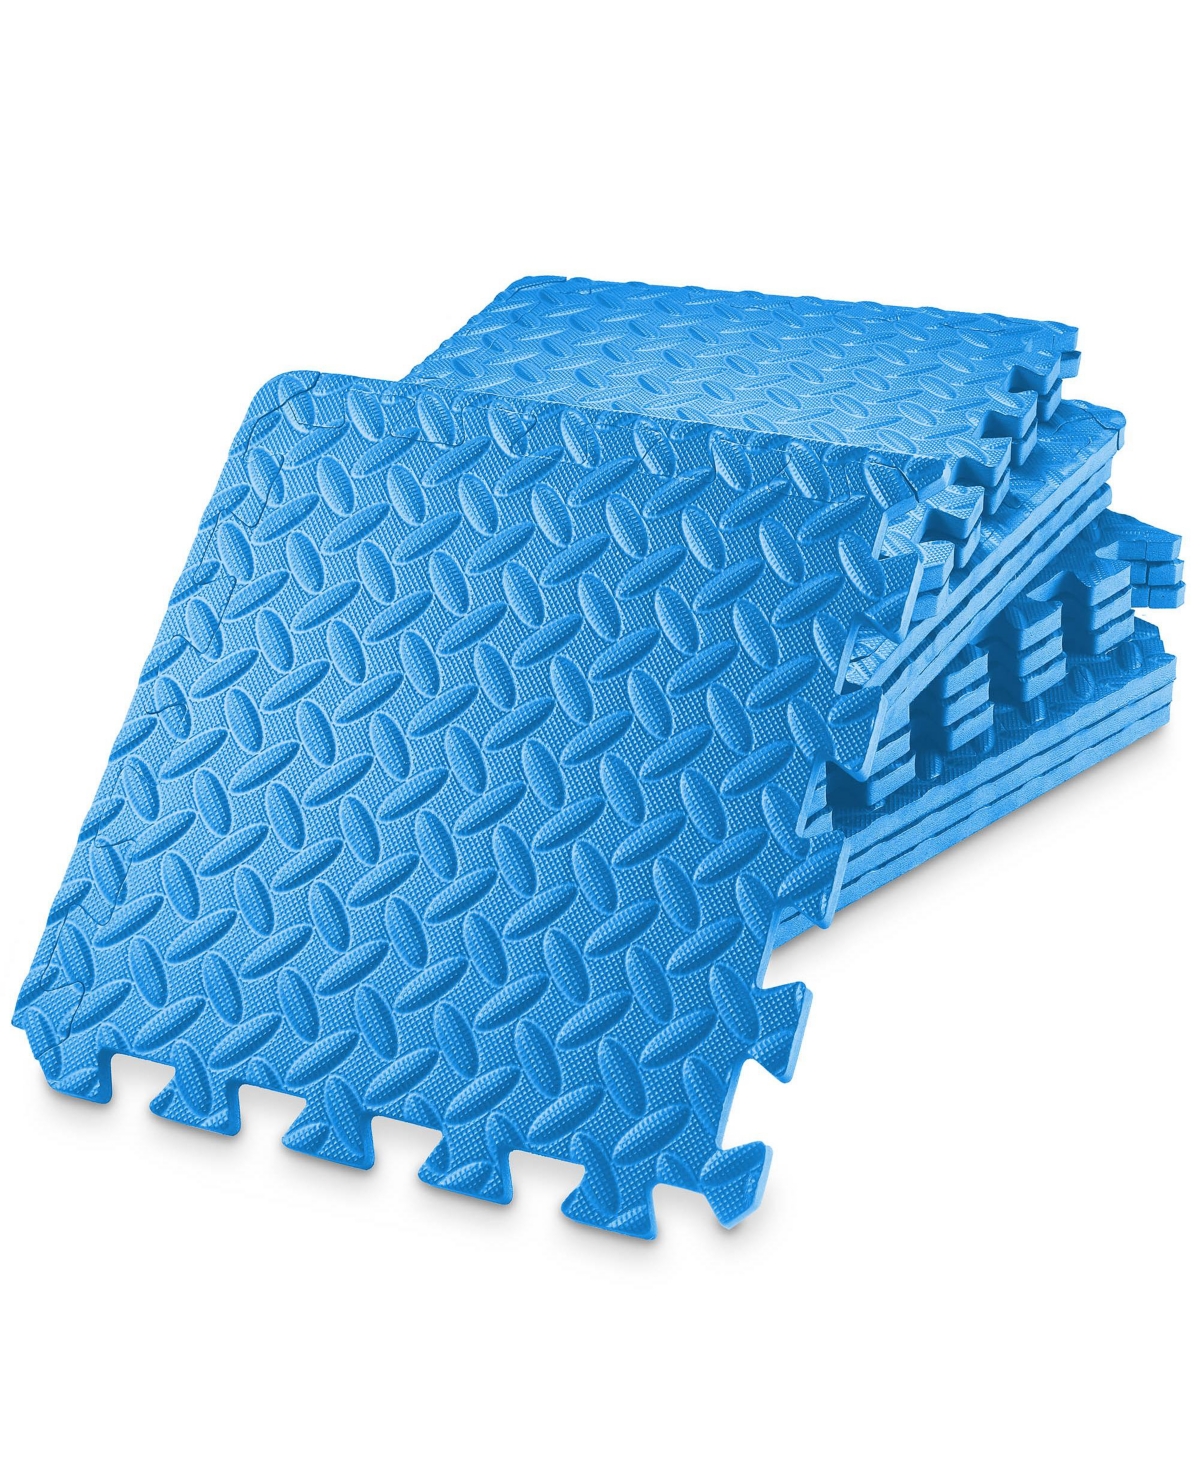 Pack of 12 Exercise Flooring Mats - 12 x 12 Inch Foam Rubber Interlocking Puzzle Floor Tiles - Blue - Blue